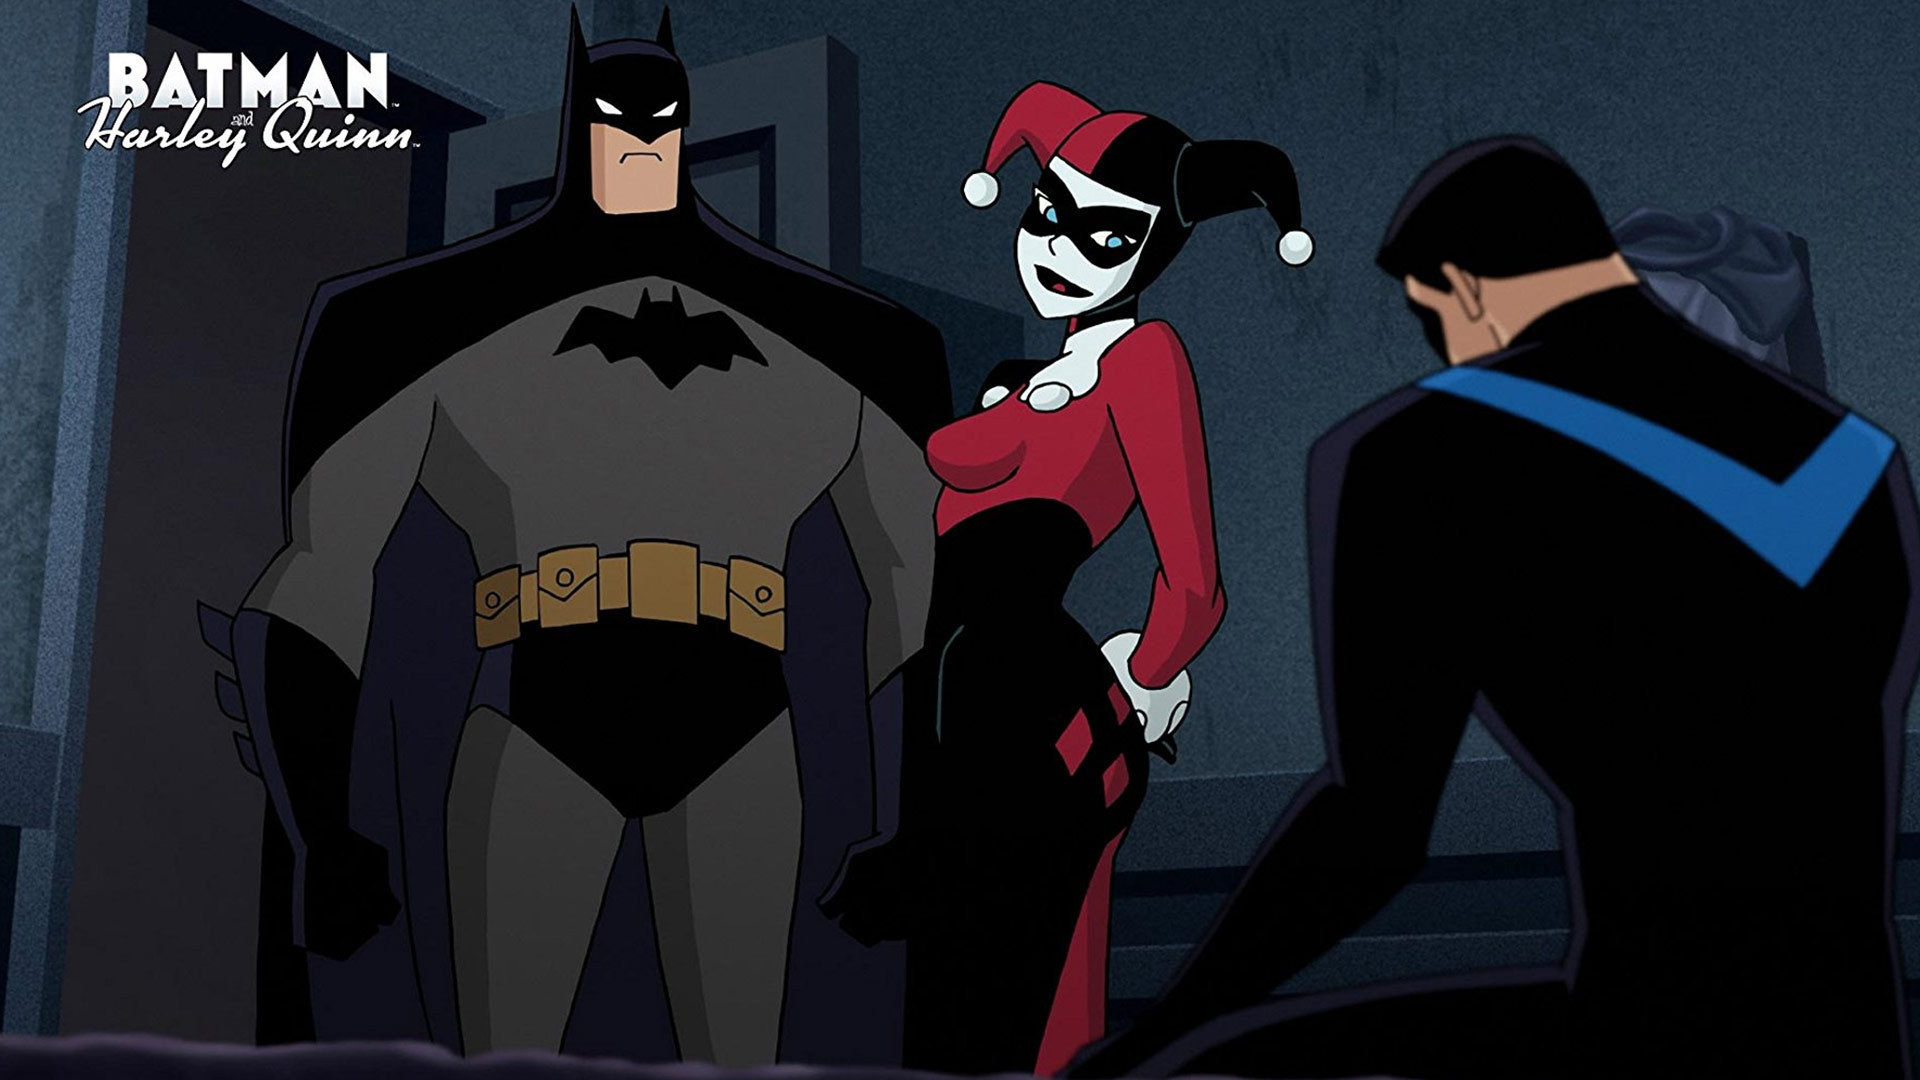 蝙蝠侠与哈莉·奎恩
		
	
    
        Batman and Harley Quinn